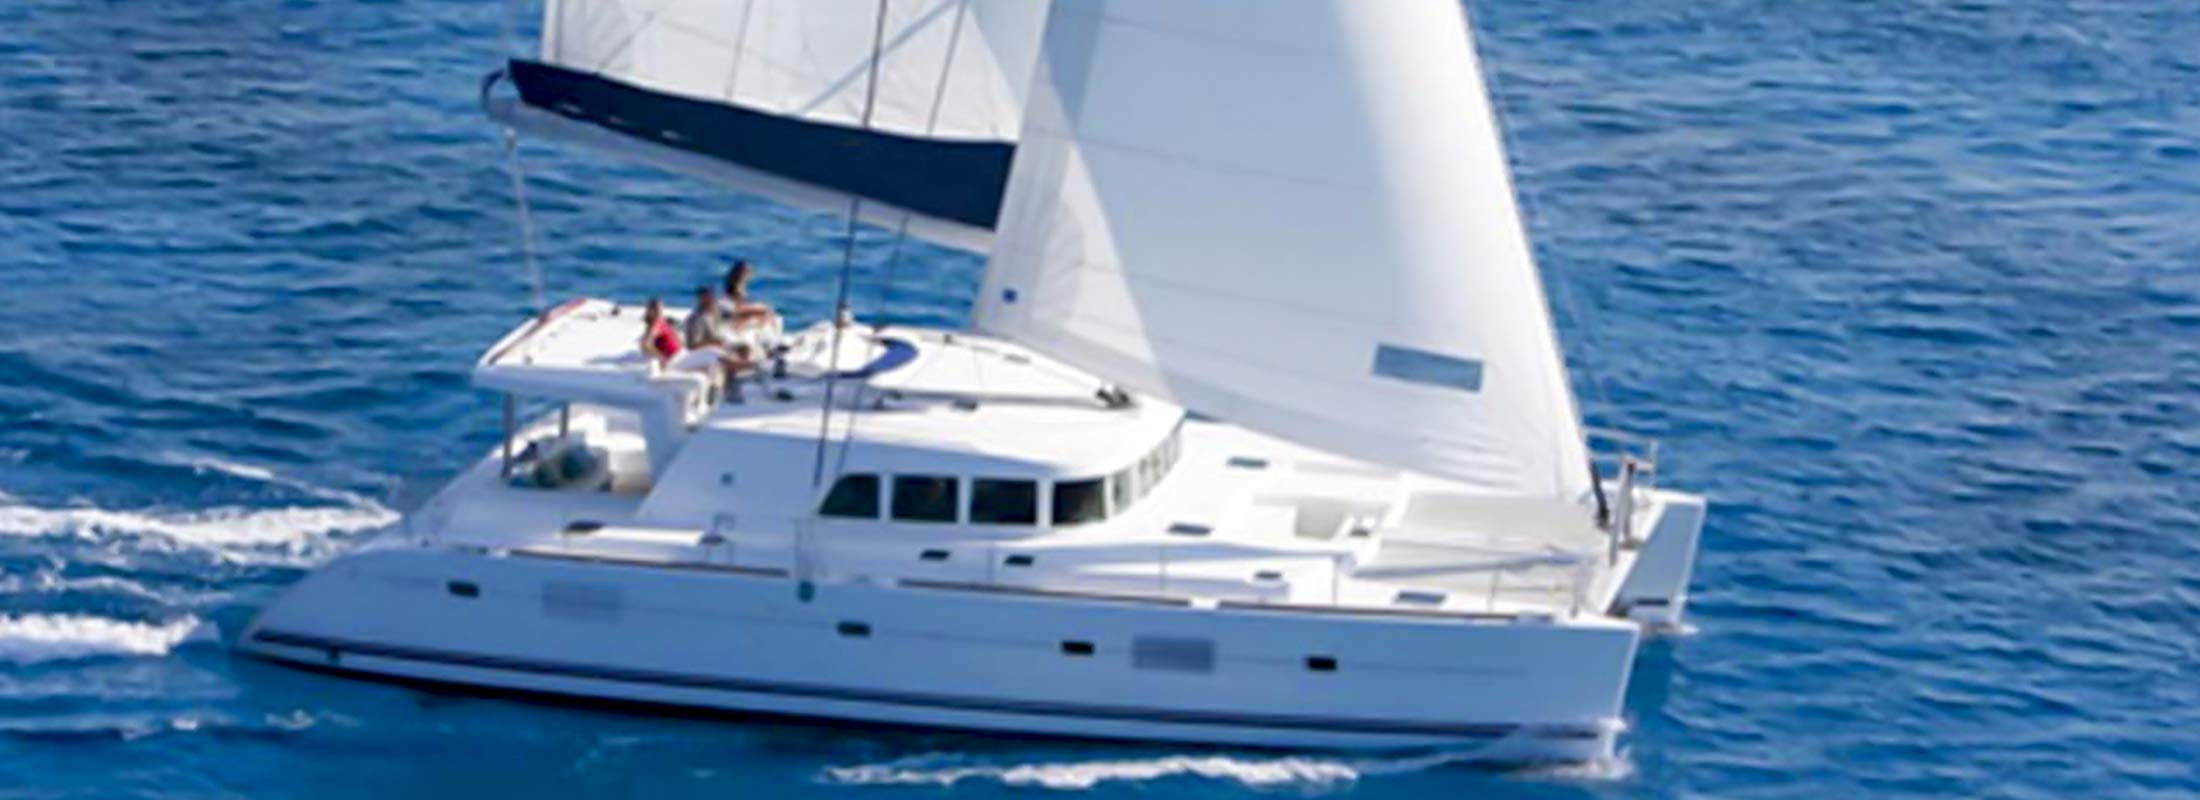 Sasha Sailing Yacht for Charter Carribean Sea The Bahamas slider 1